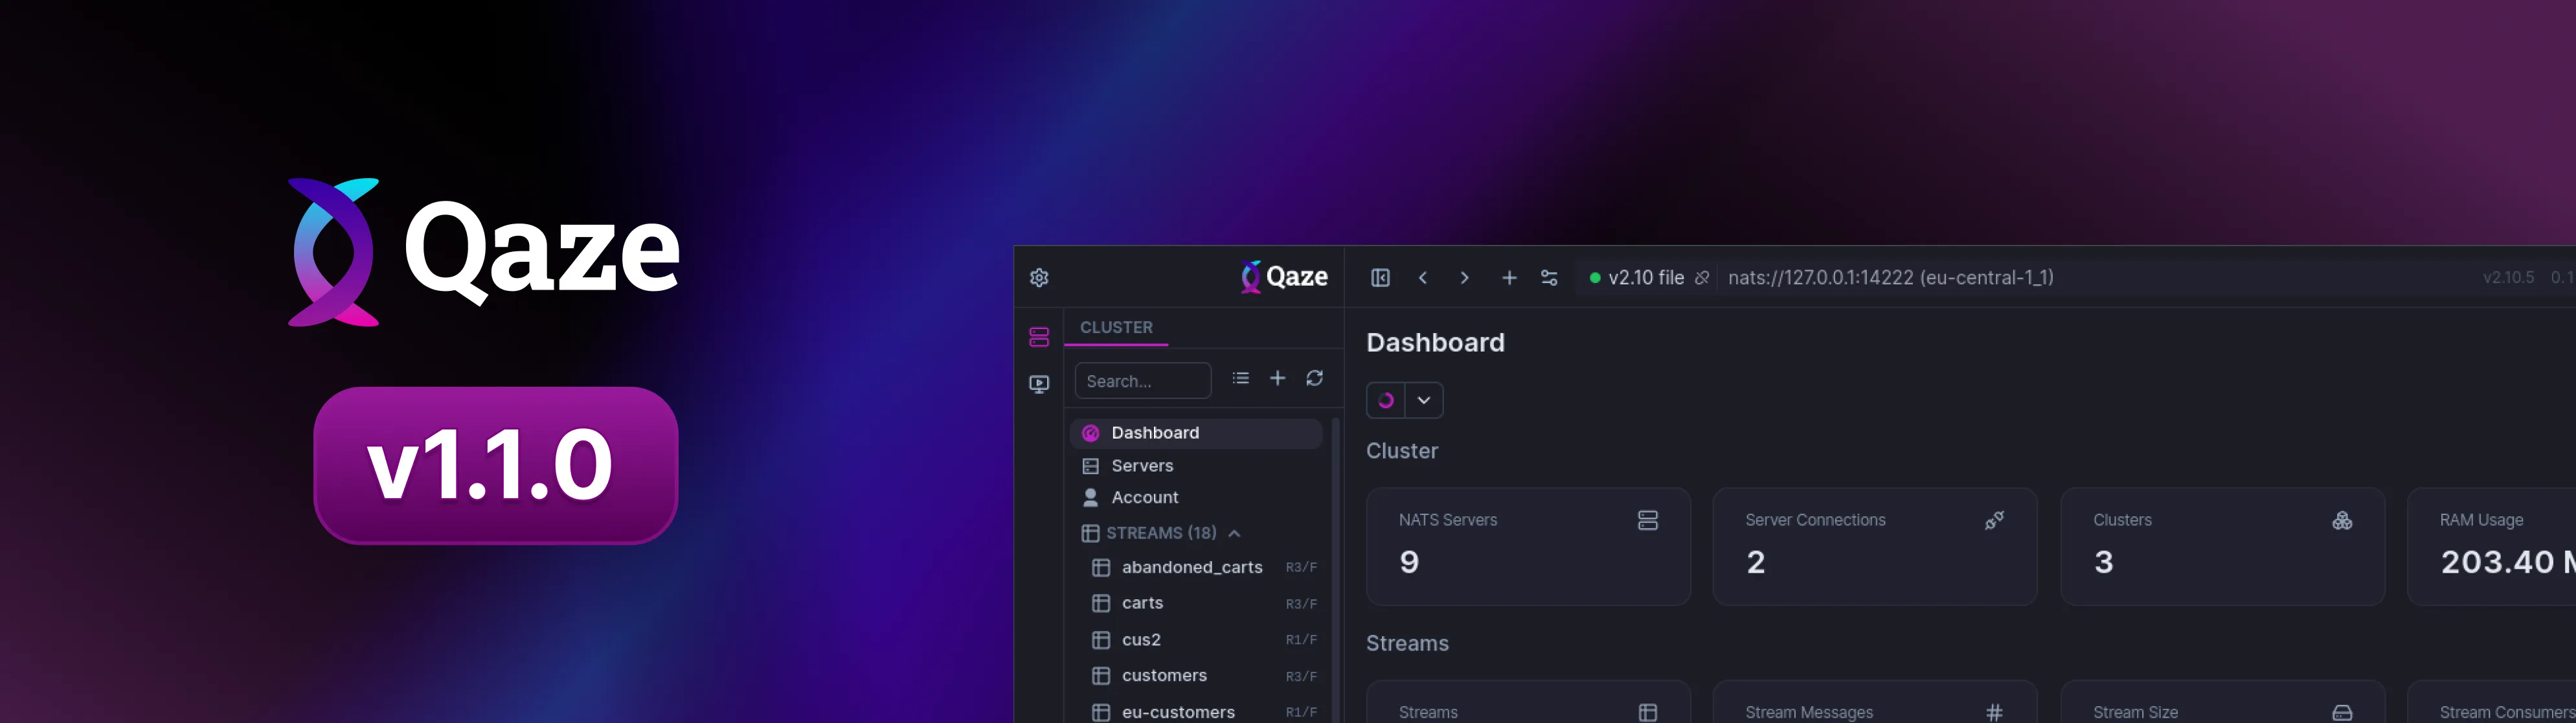 Qaze Version 1.1